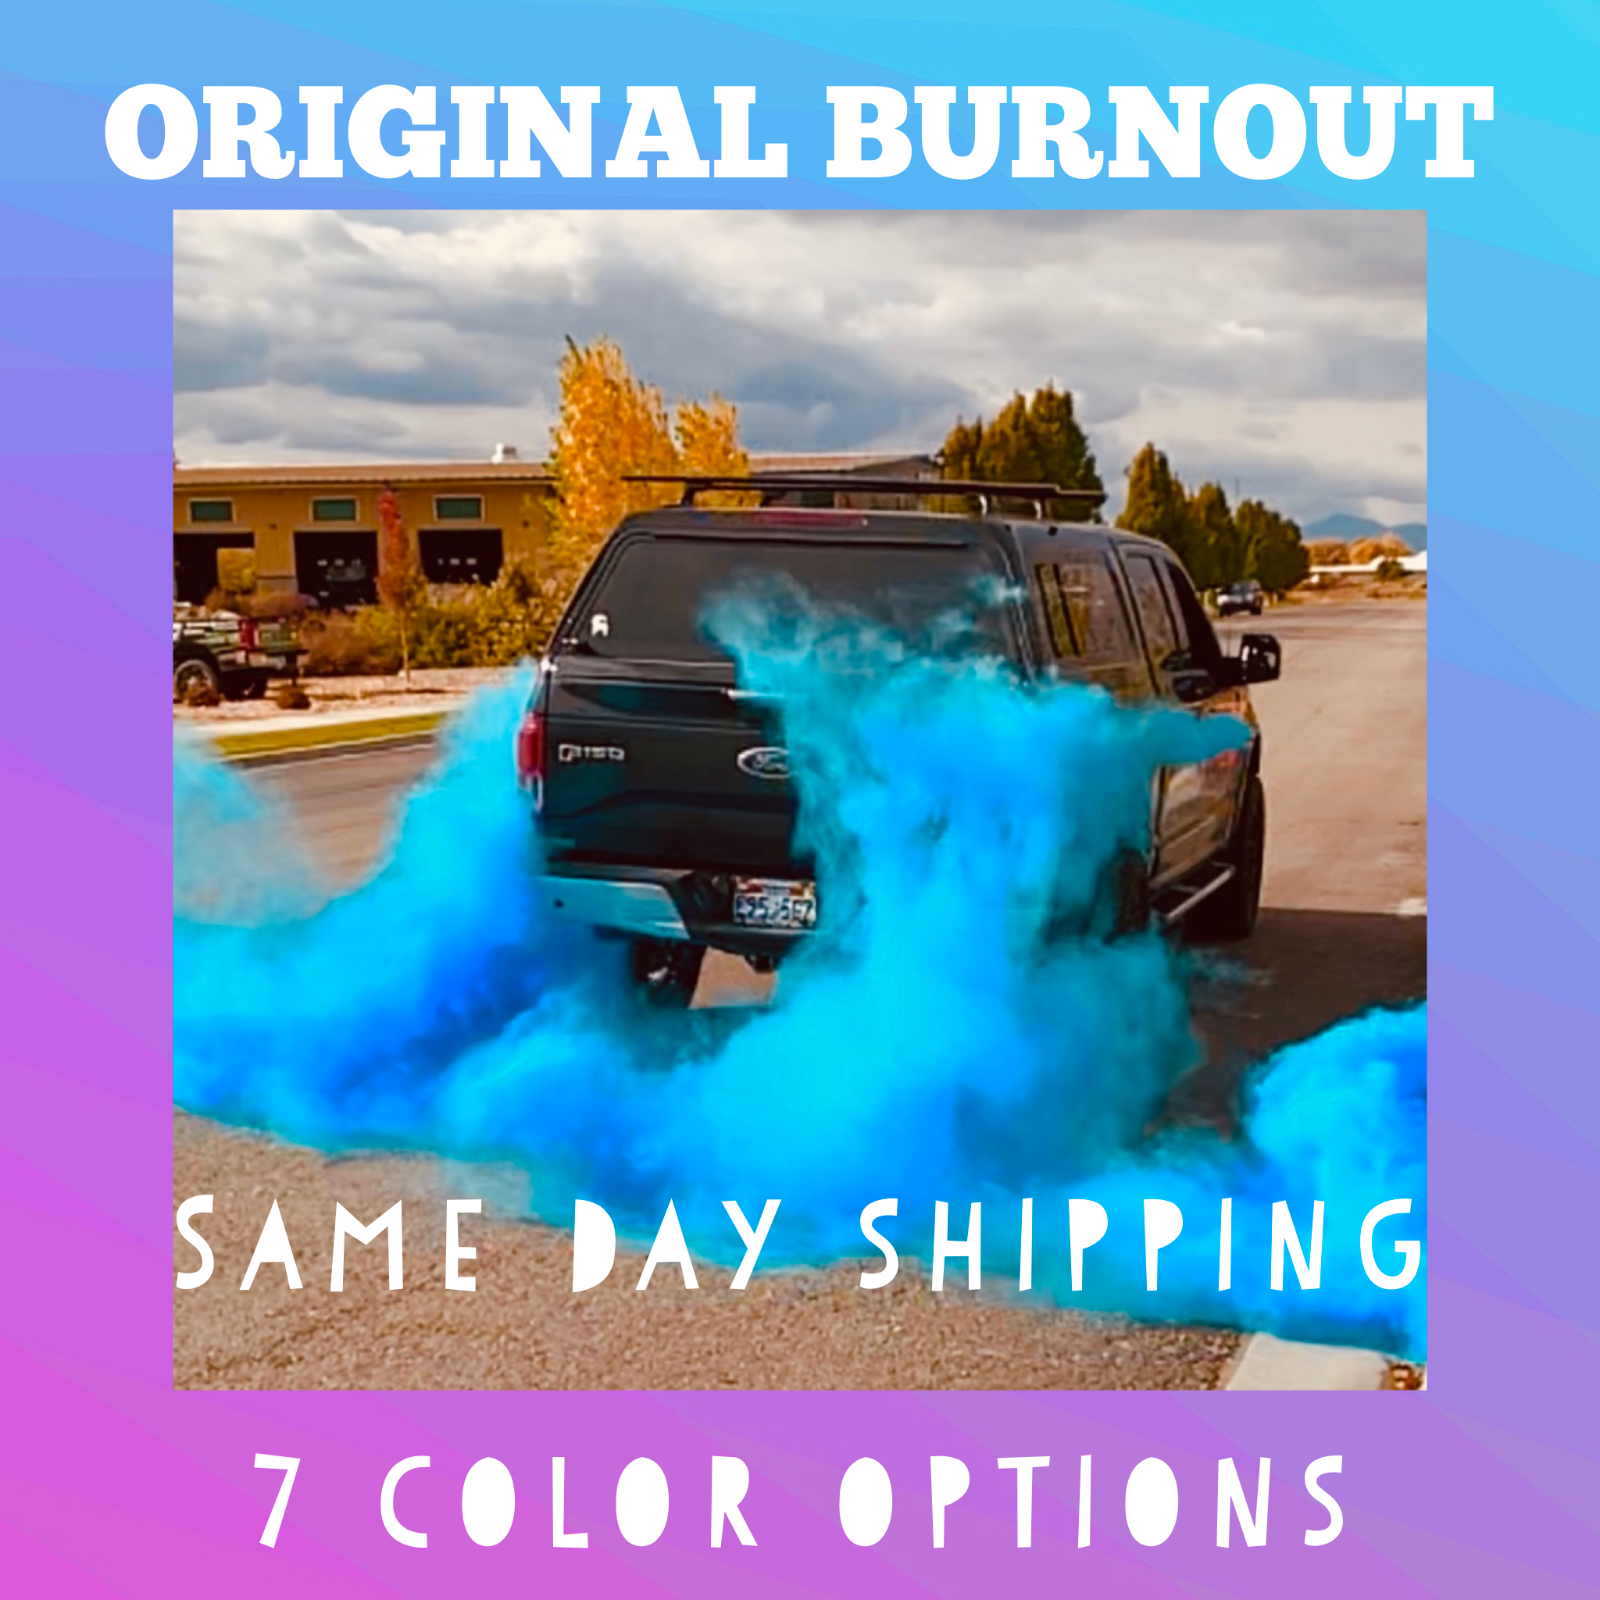 Holi Color Powder Tire Burnout Bag - Gender Reveal Ideas Colored Exhaust Smoke